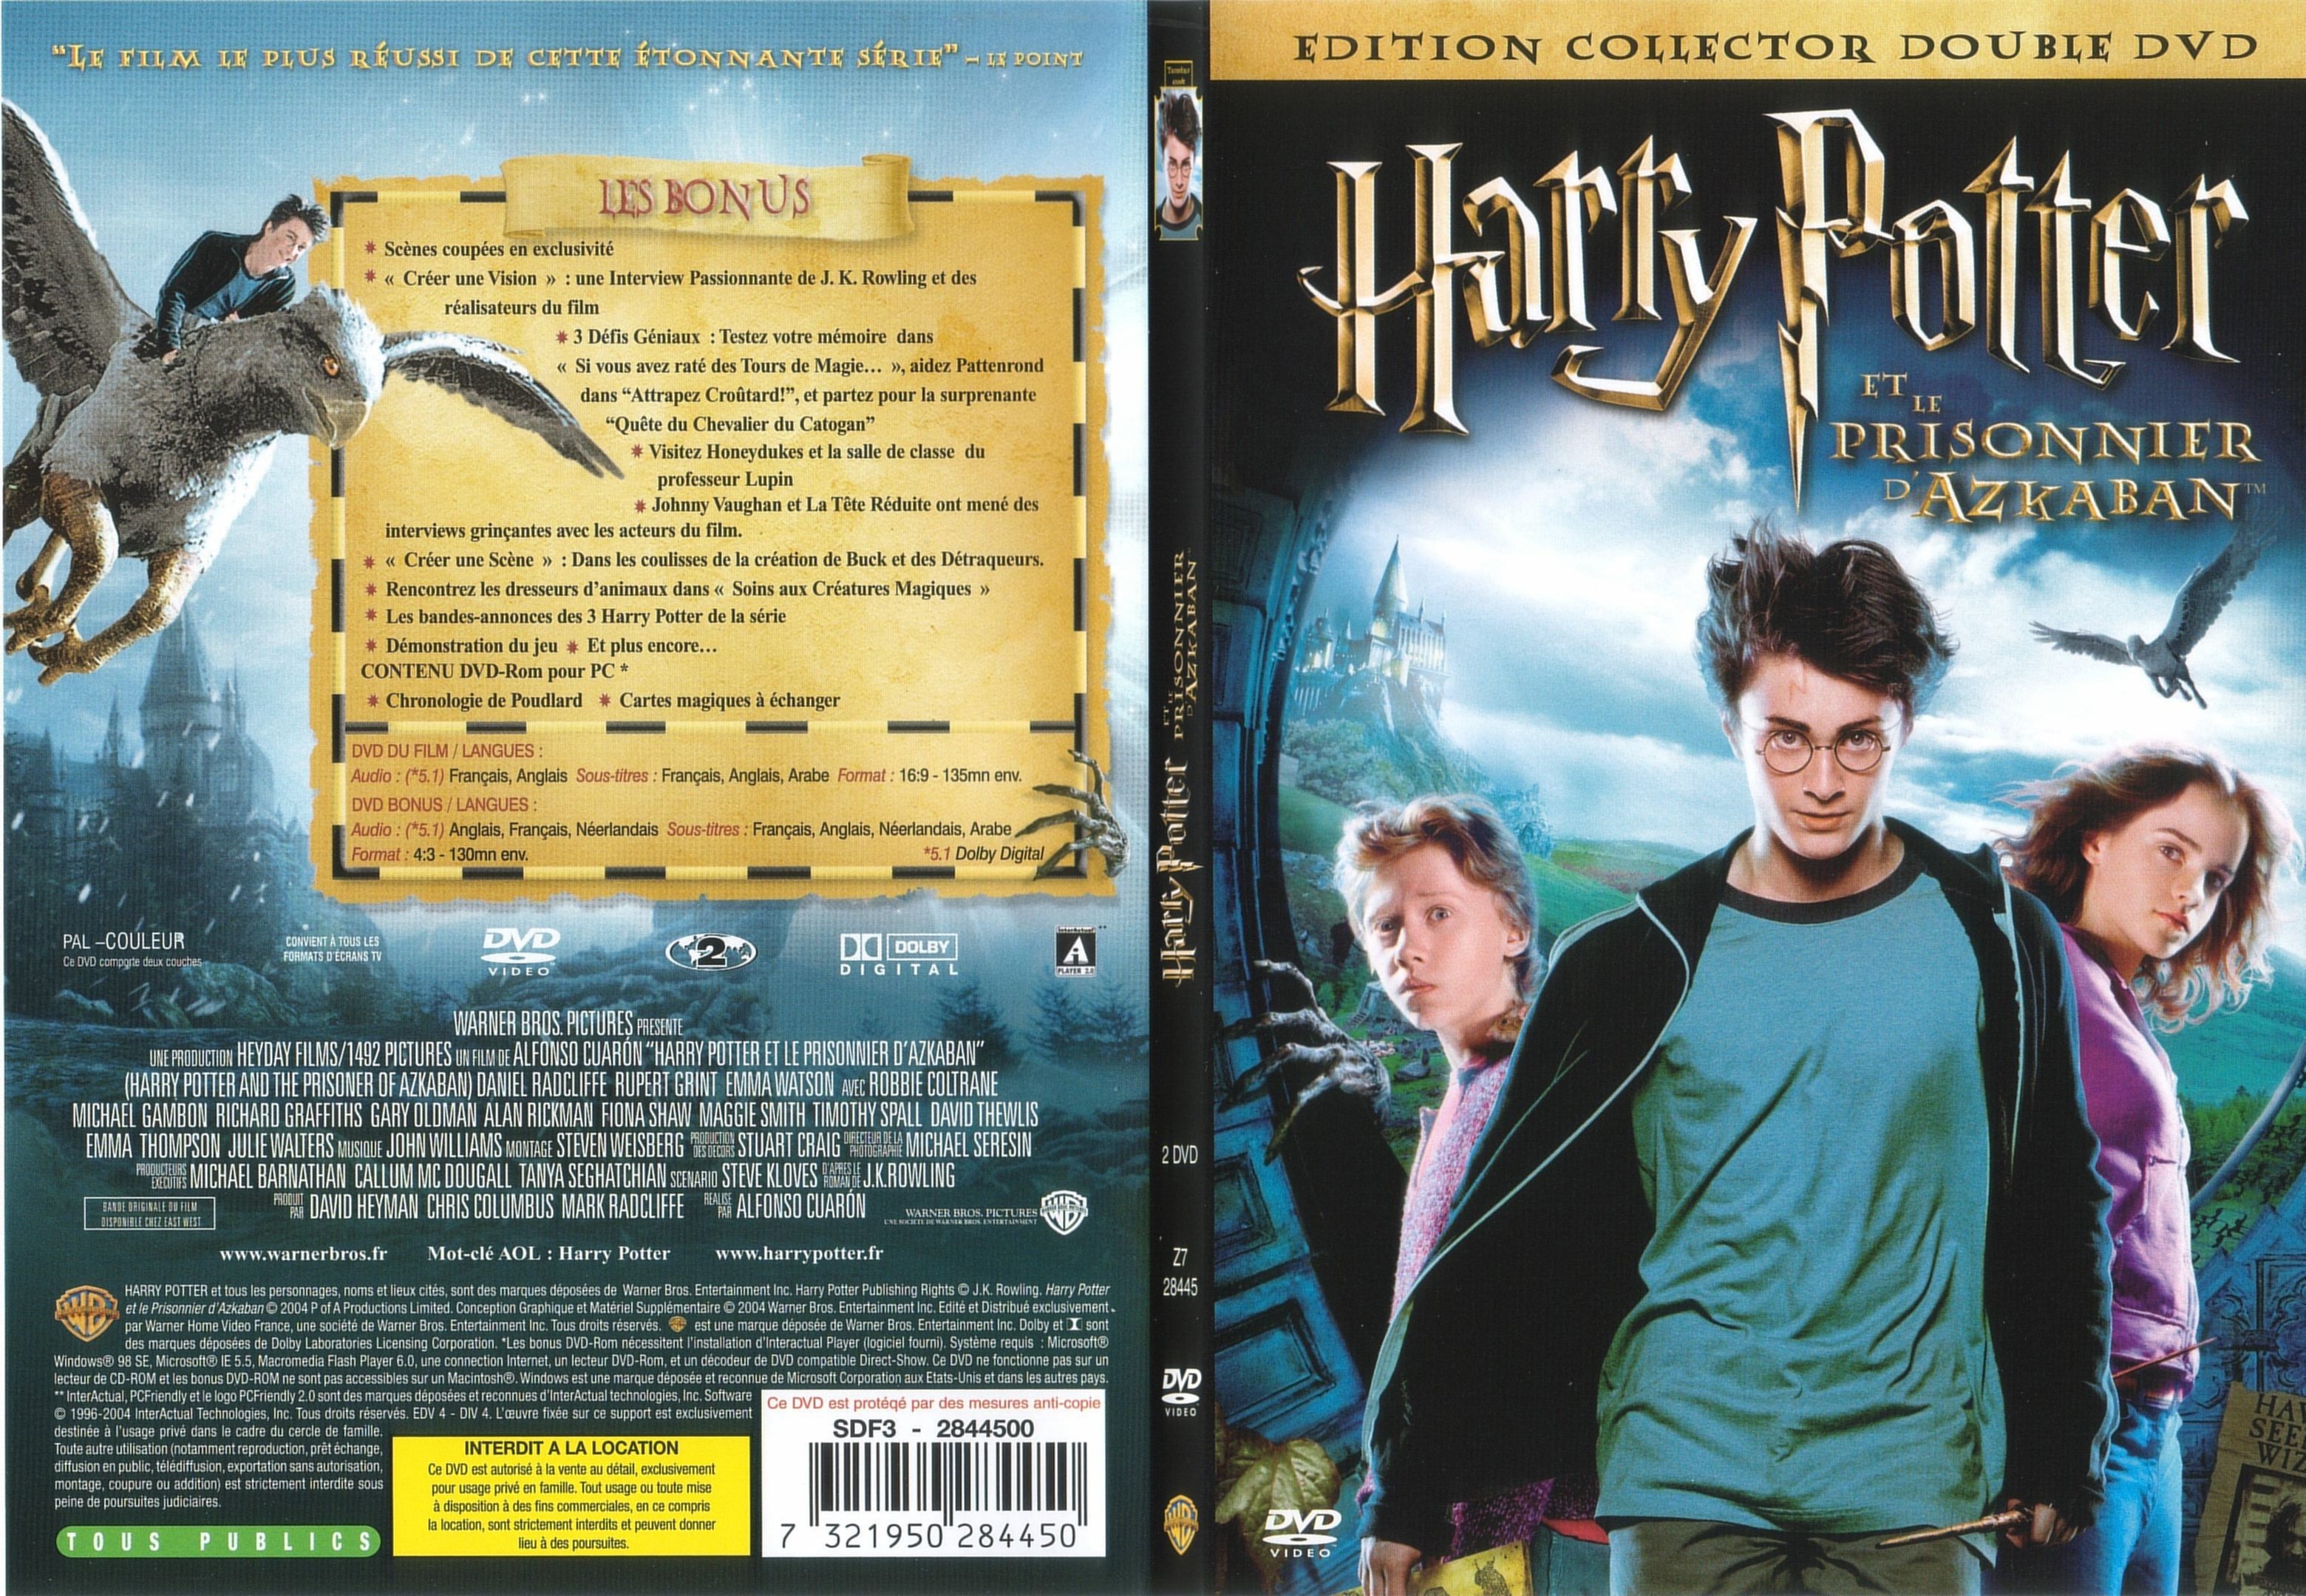 Jaquette DVD Harry Potter 3 - SLIM